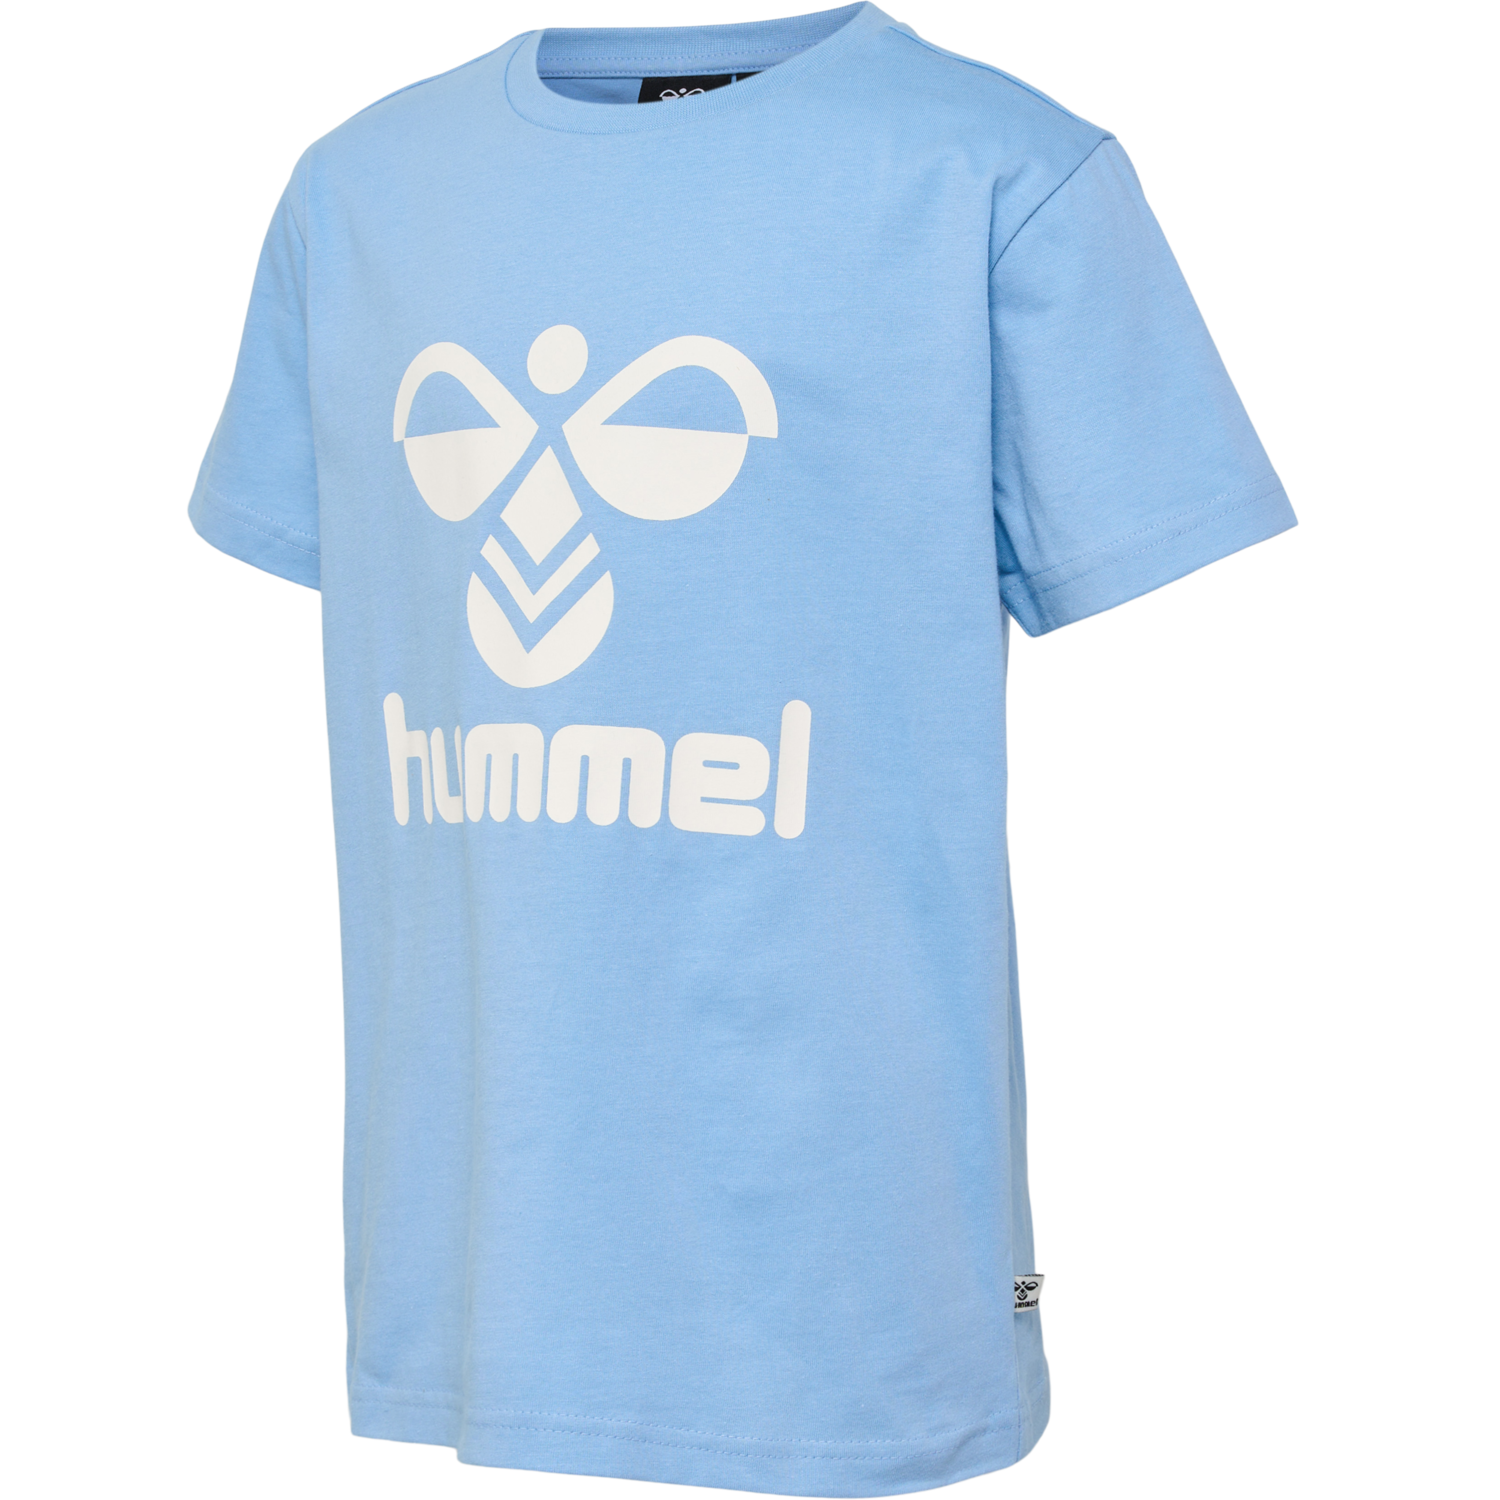 Hummel Hmltres T-Shirt S/S, t-skjorte, - SPORT AYA AS barn